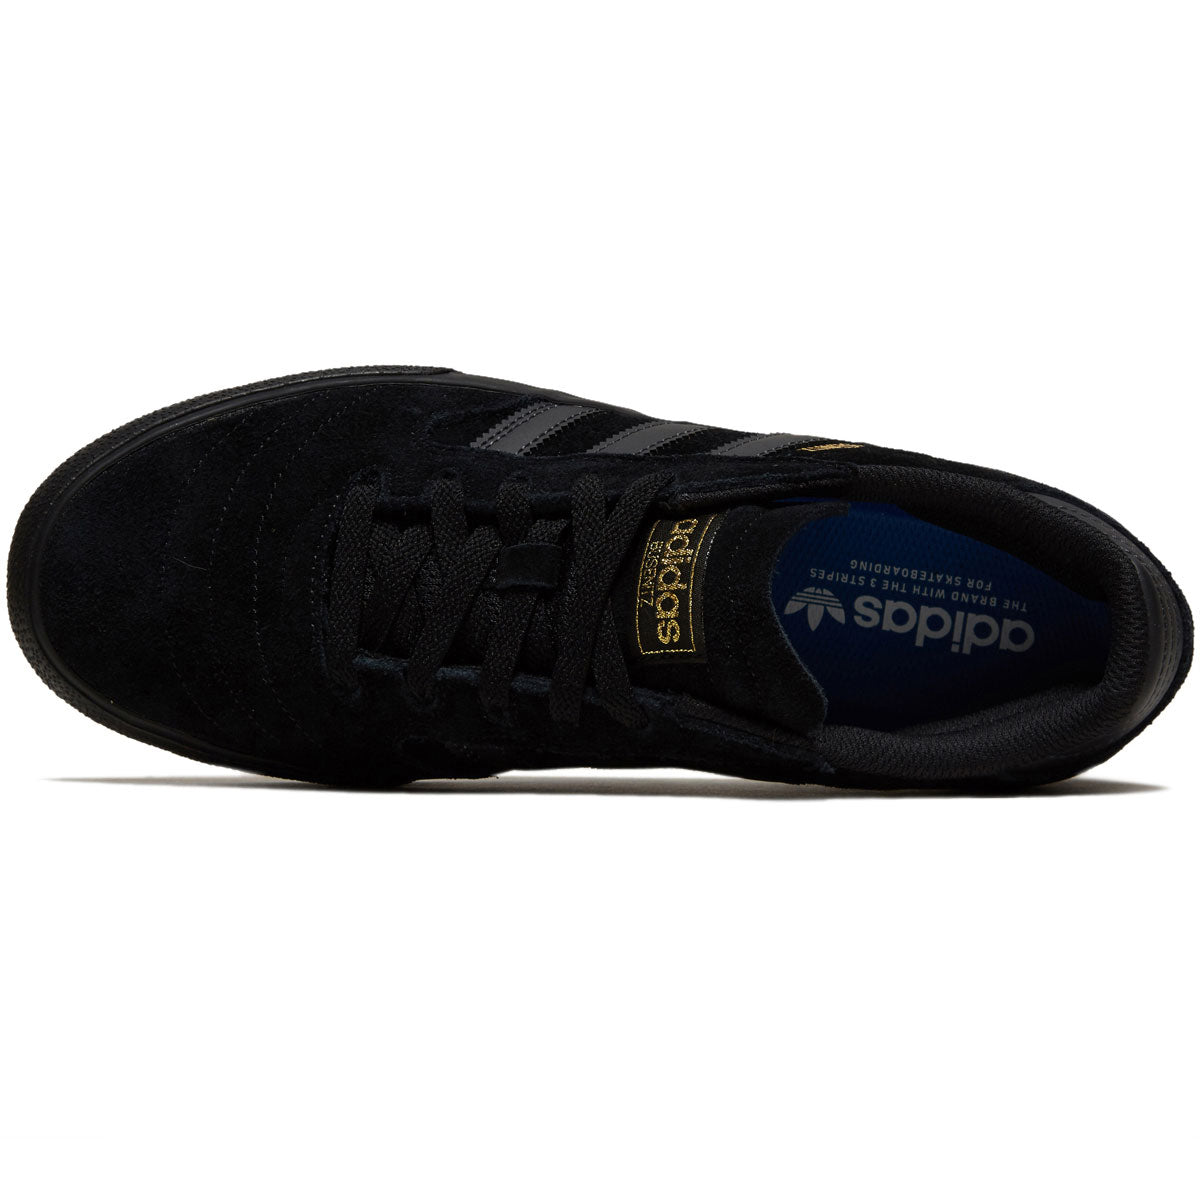 Adidas Busenitz Vulc II Shoes - Core Black/Carbon/Core Black image 3